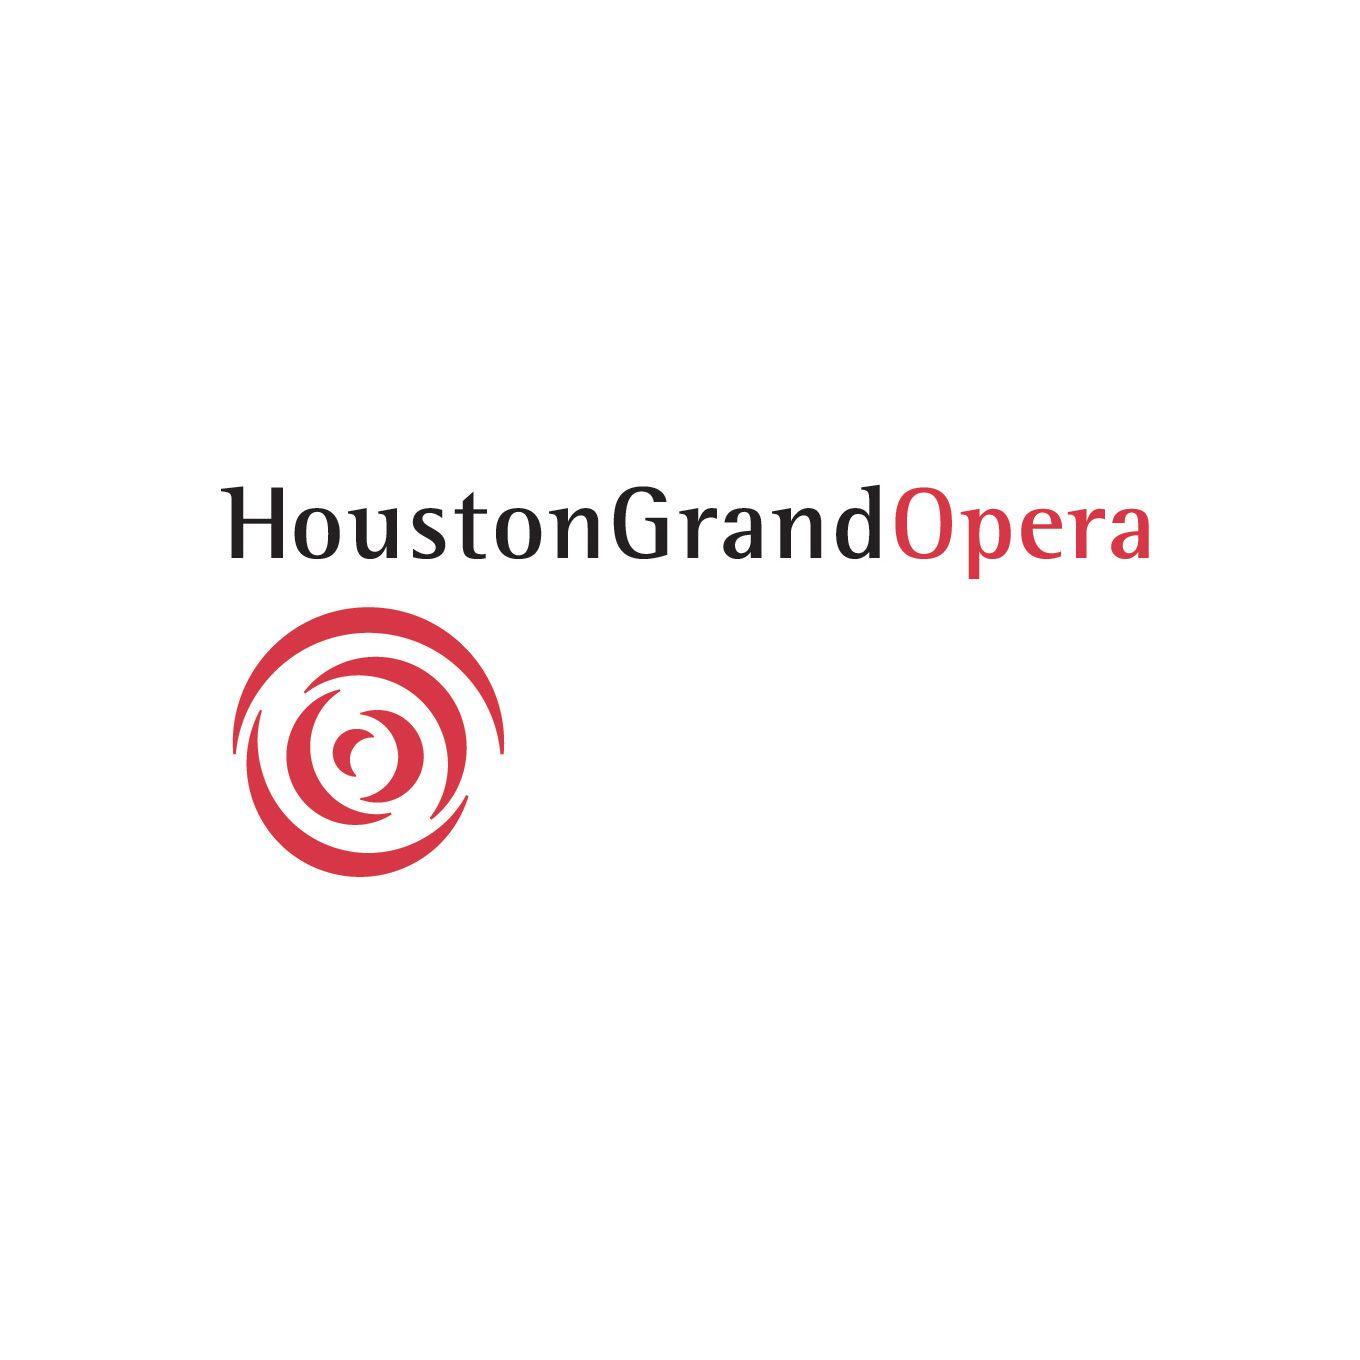 Grand Opera Logo - Houston Grand Opera